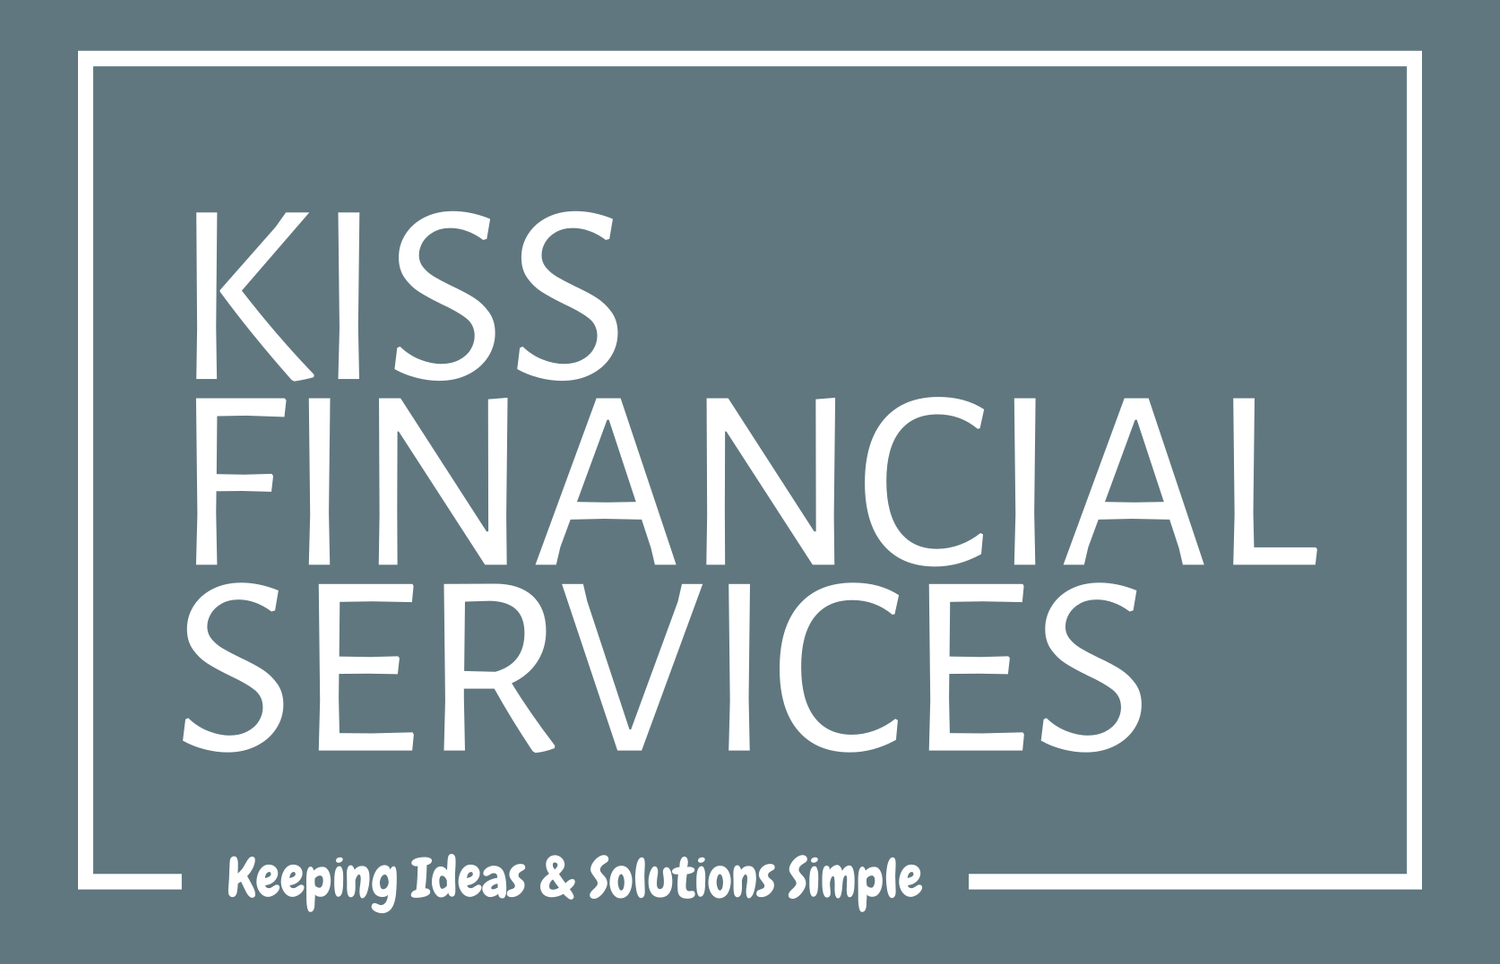 KISS Financial Services